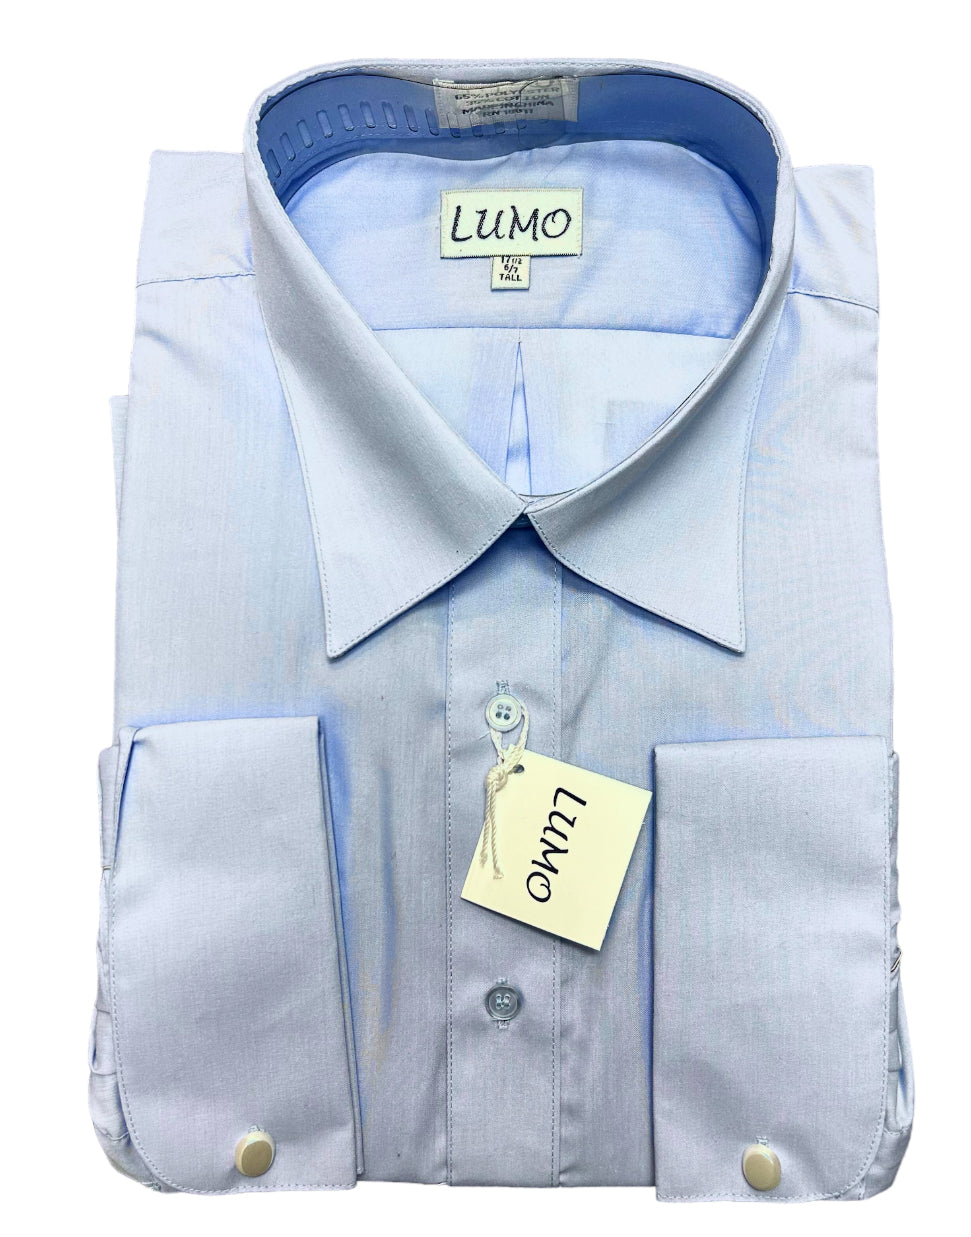 LUMO FRENCH CUFF DRESS SHIRT-SKY